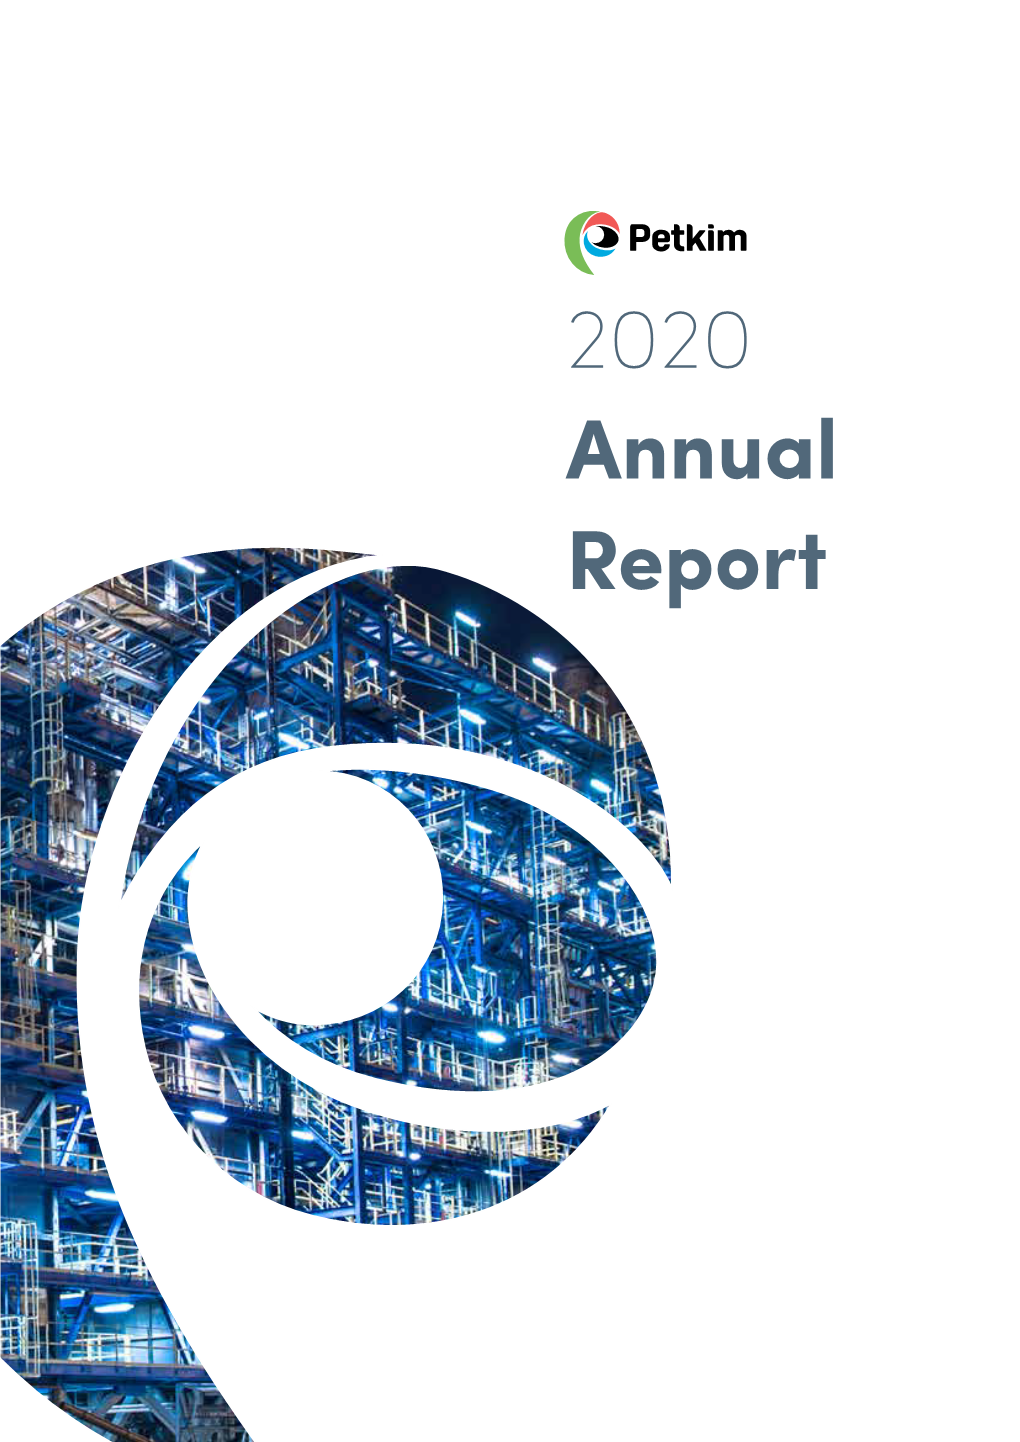 Annual Report Reporting Period: 01 January - 31 December 2020 Company Title: Petkim Petrokimya Holding A.Ş